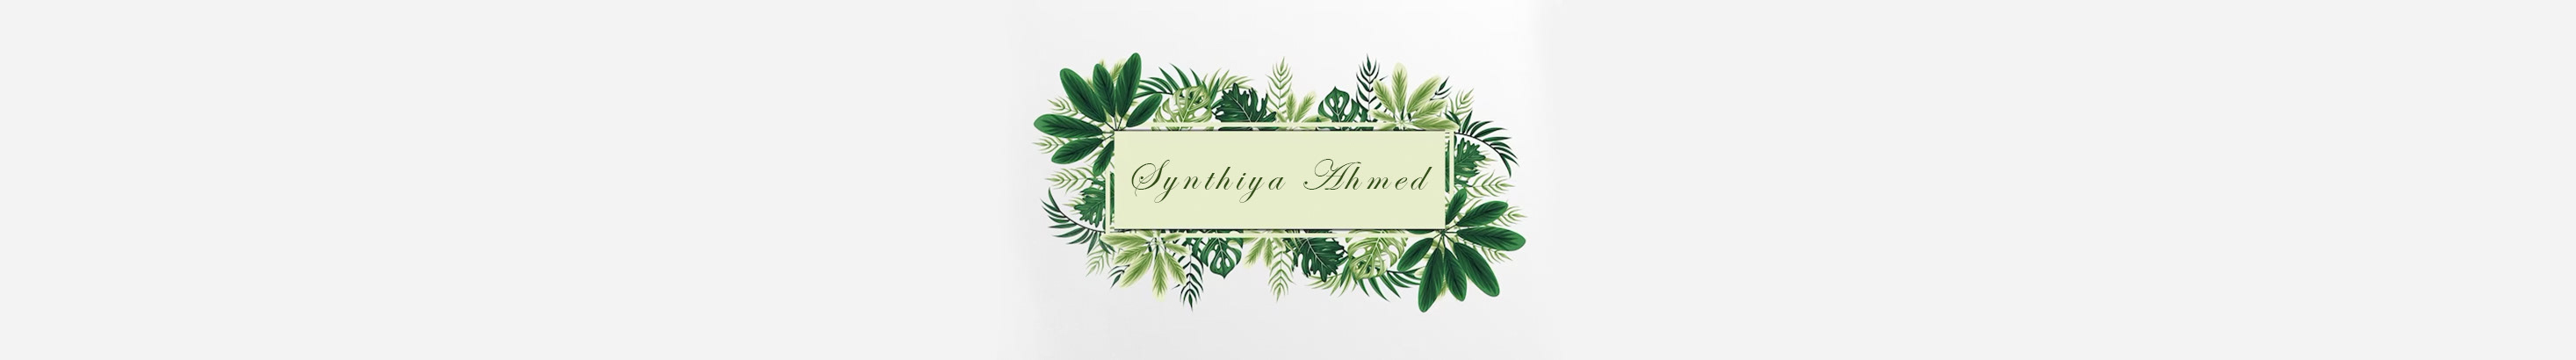 Synthiya Ahmed profil başlığı